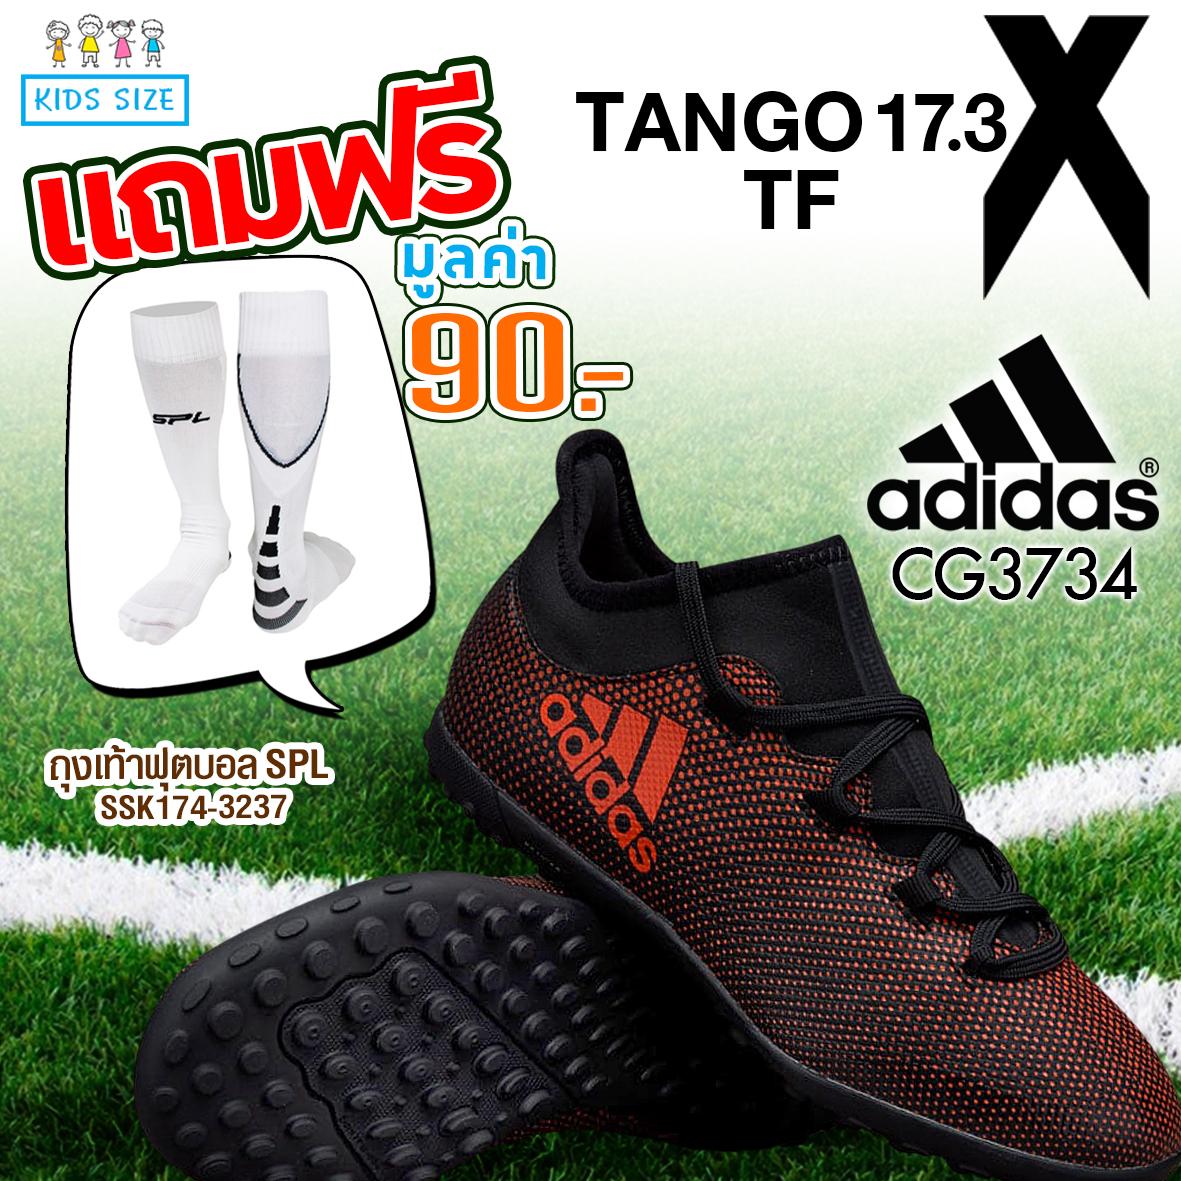 Adidas รองเท้า ฟุตบอล สำหรับเด็ก อาดิดาส Football Kid Shoe X Tango 17.3tf Cg3734 (2490) แถมฟรี Ssk174-3237 ถุงเท้าฟุตบอล Striker 17.4 สีขาว. 